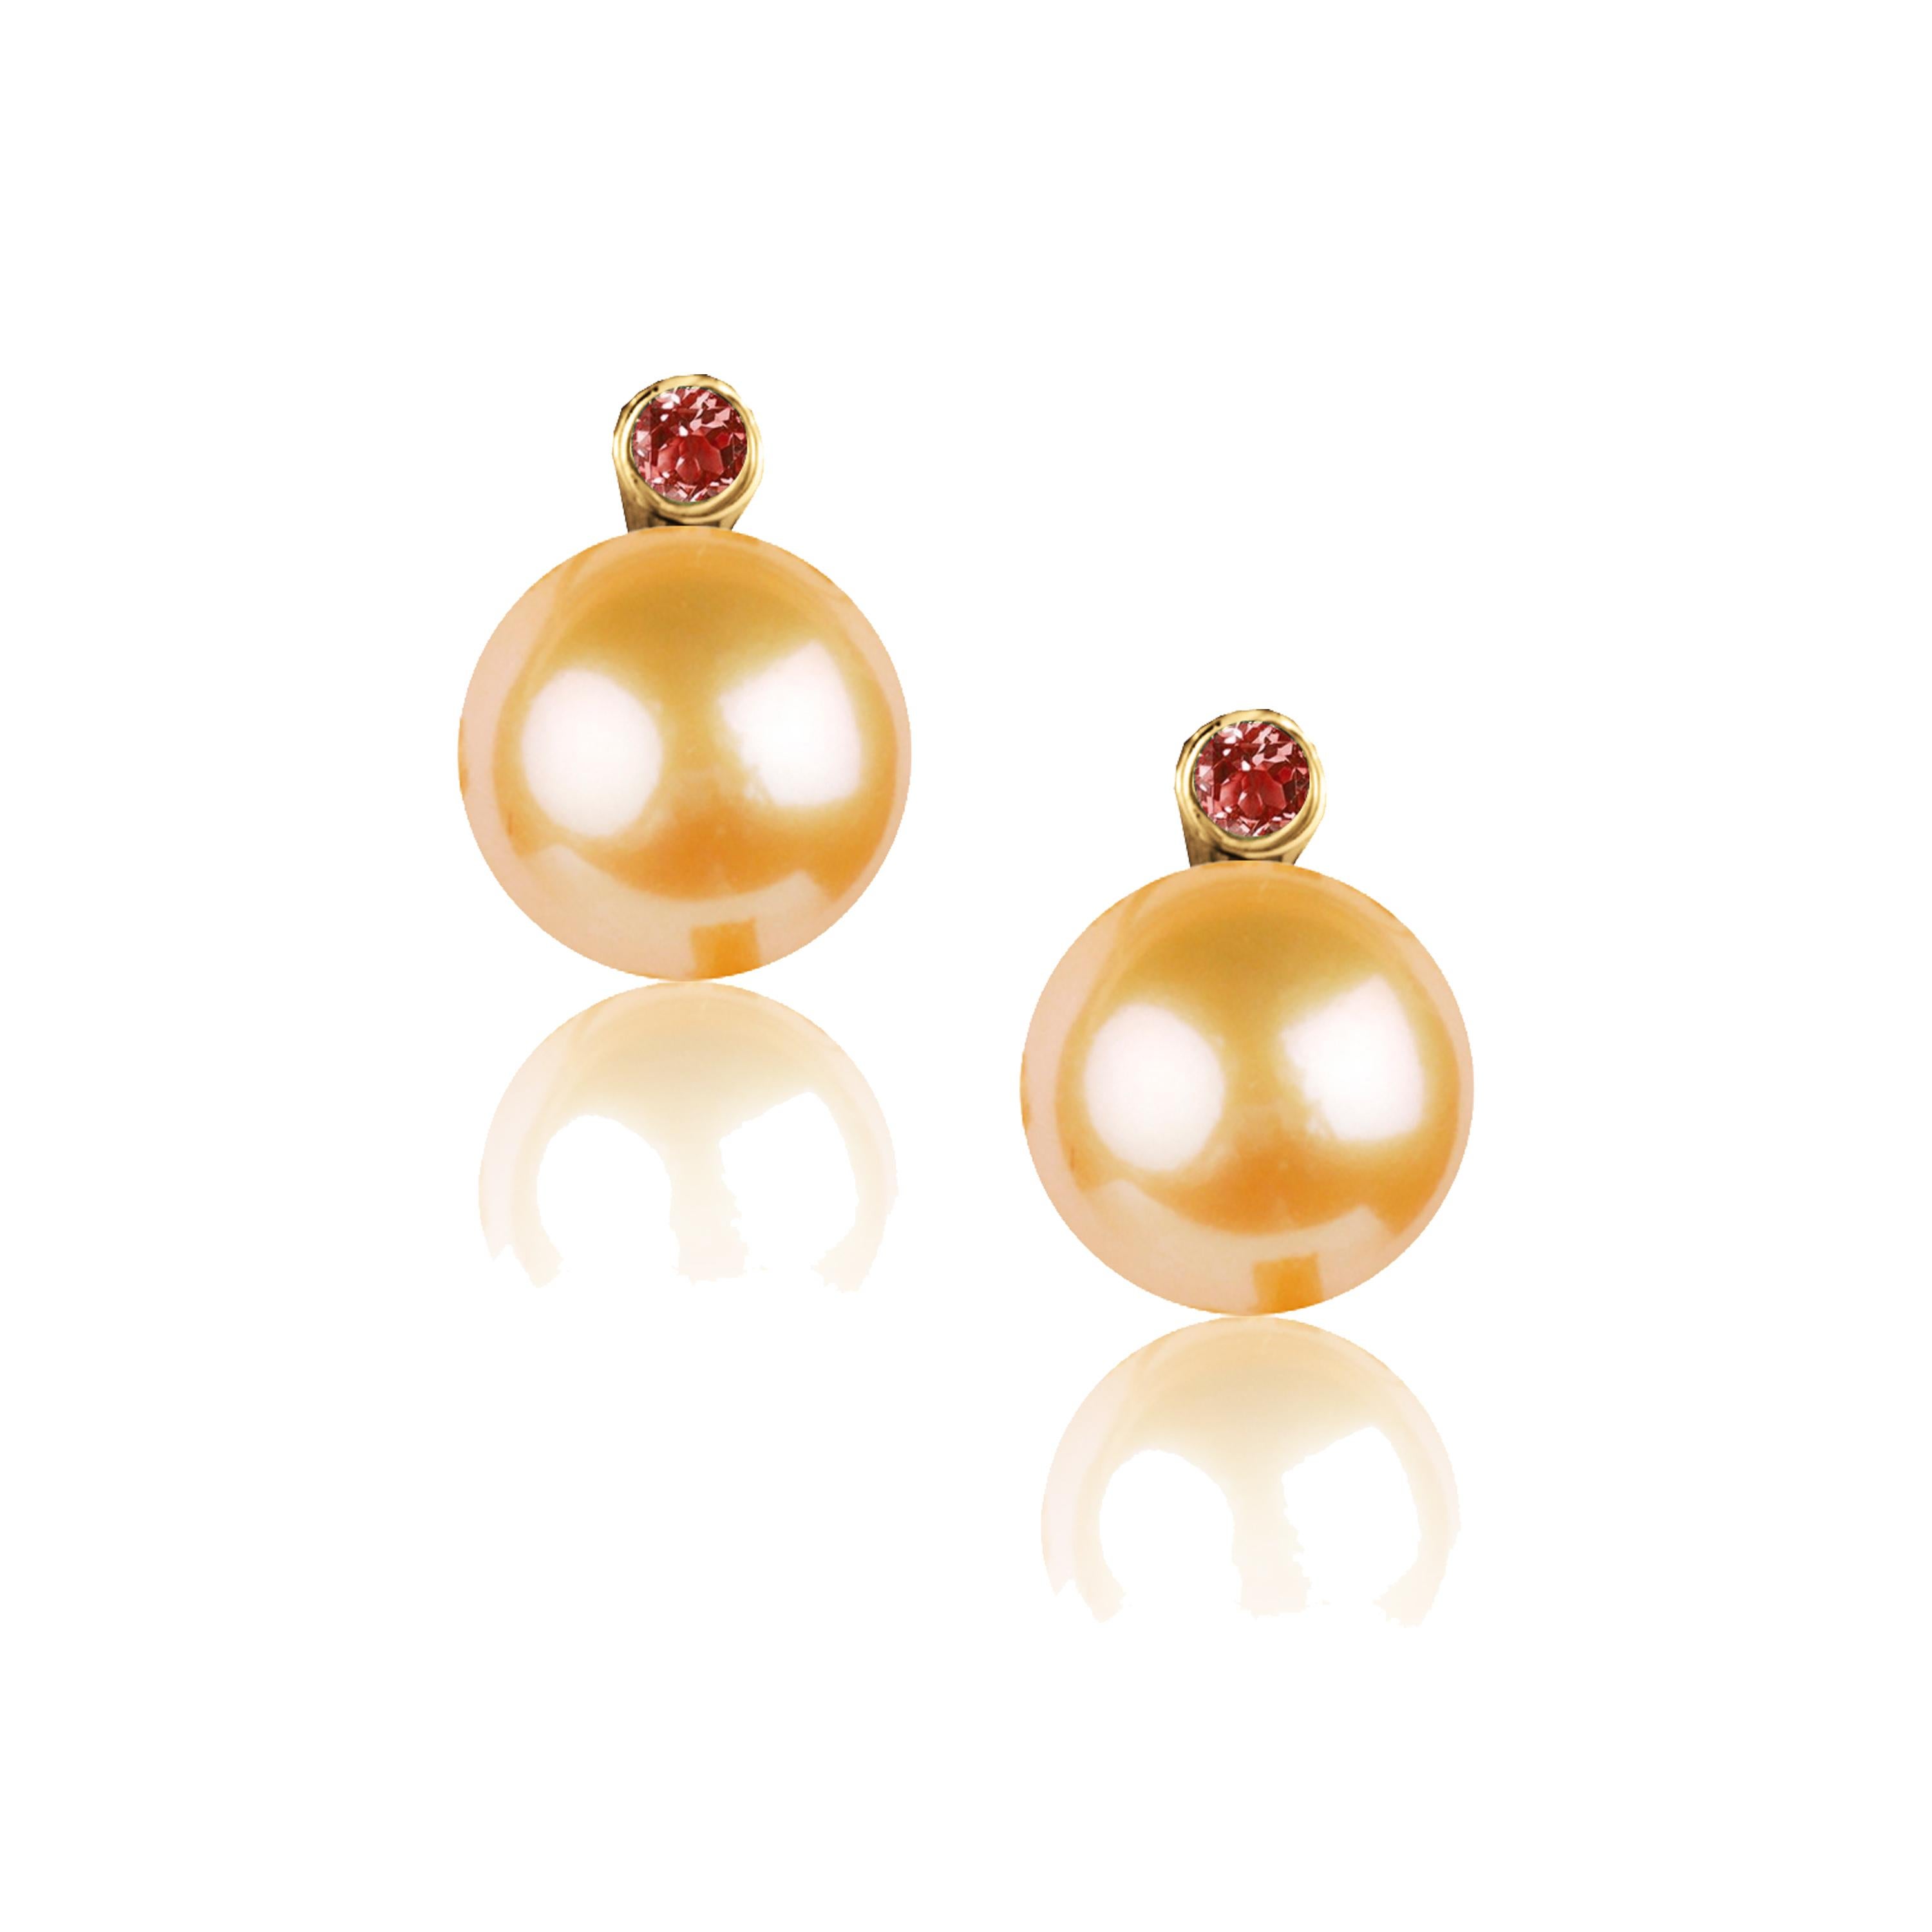 Contemporary Fei Liu 18 Karat Yellow Gold Pearl Stud Earrings with Red Garnet